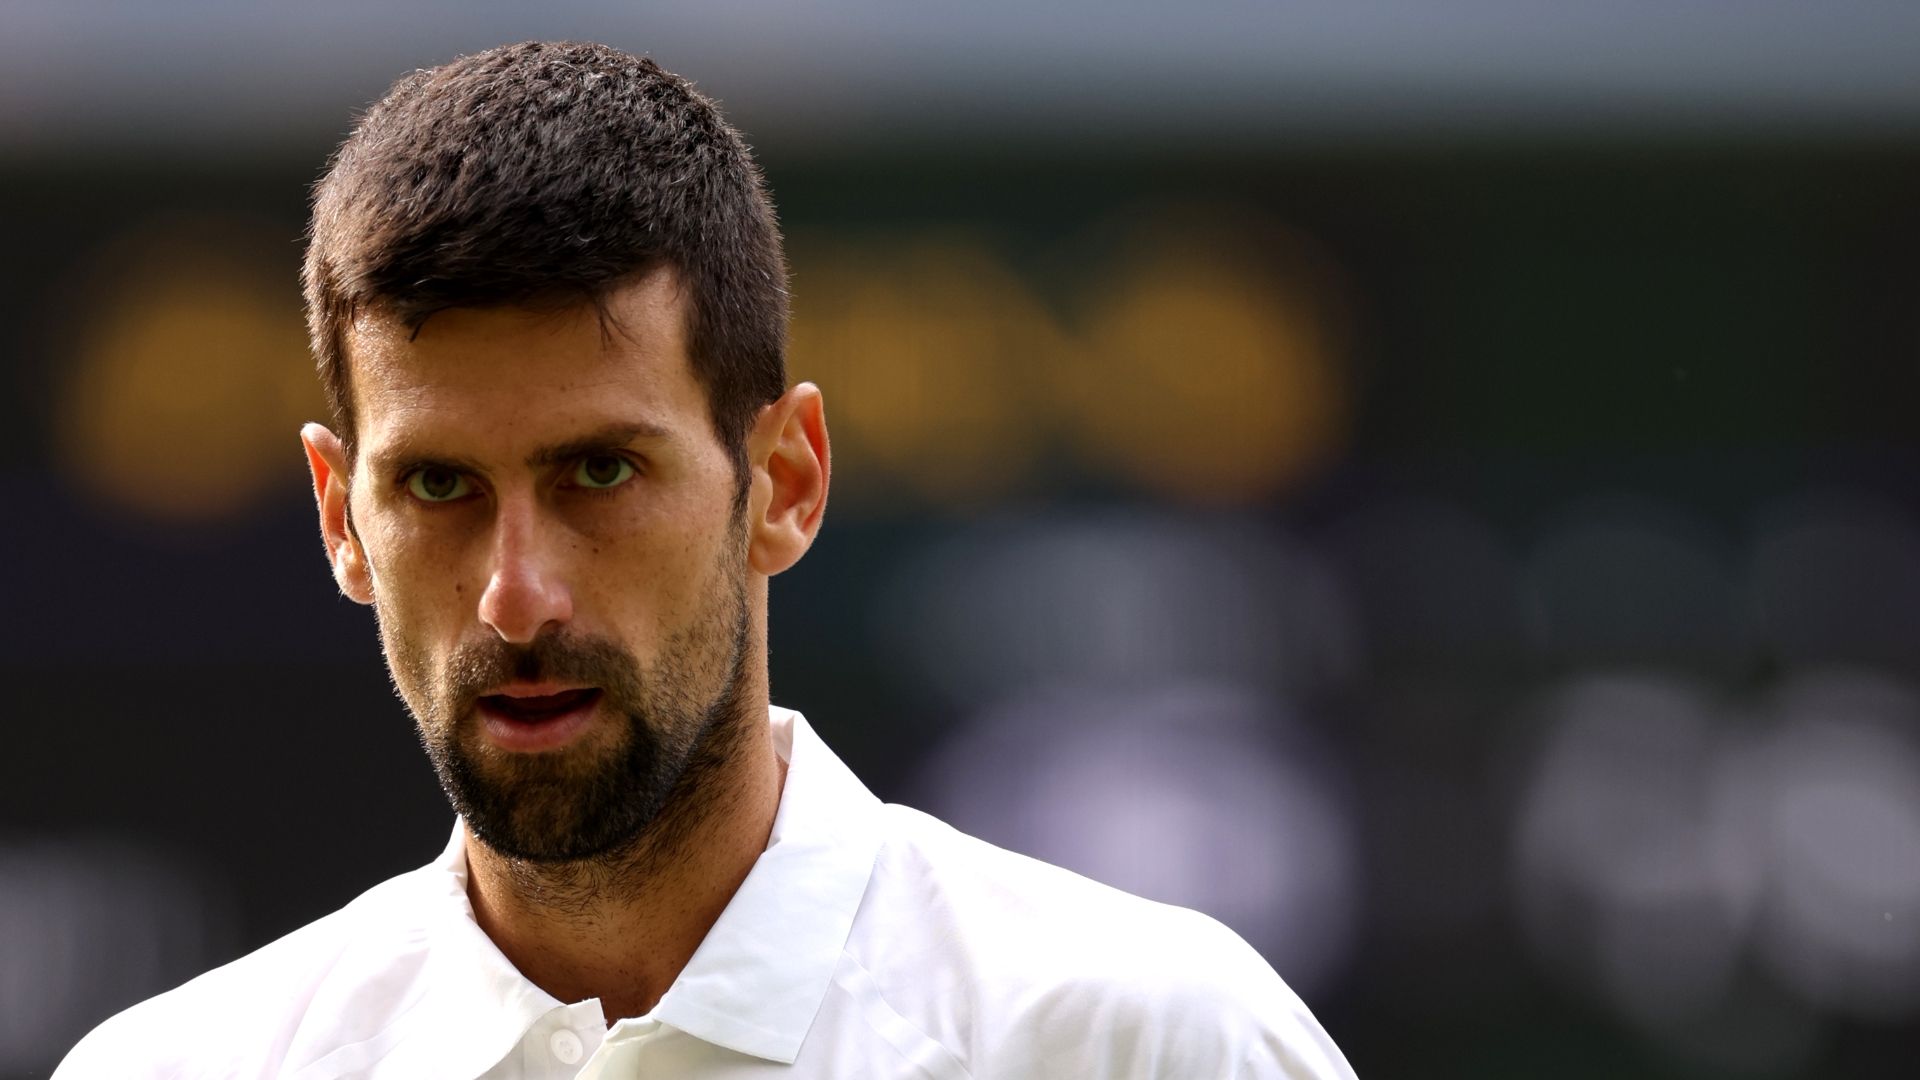 Djokovic breaks Alcaraz again to force 5th set - Stream the Video